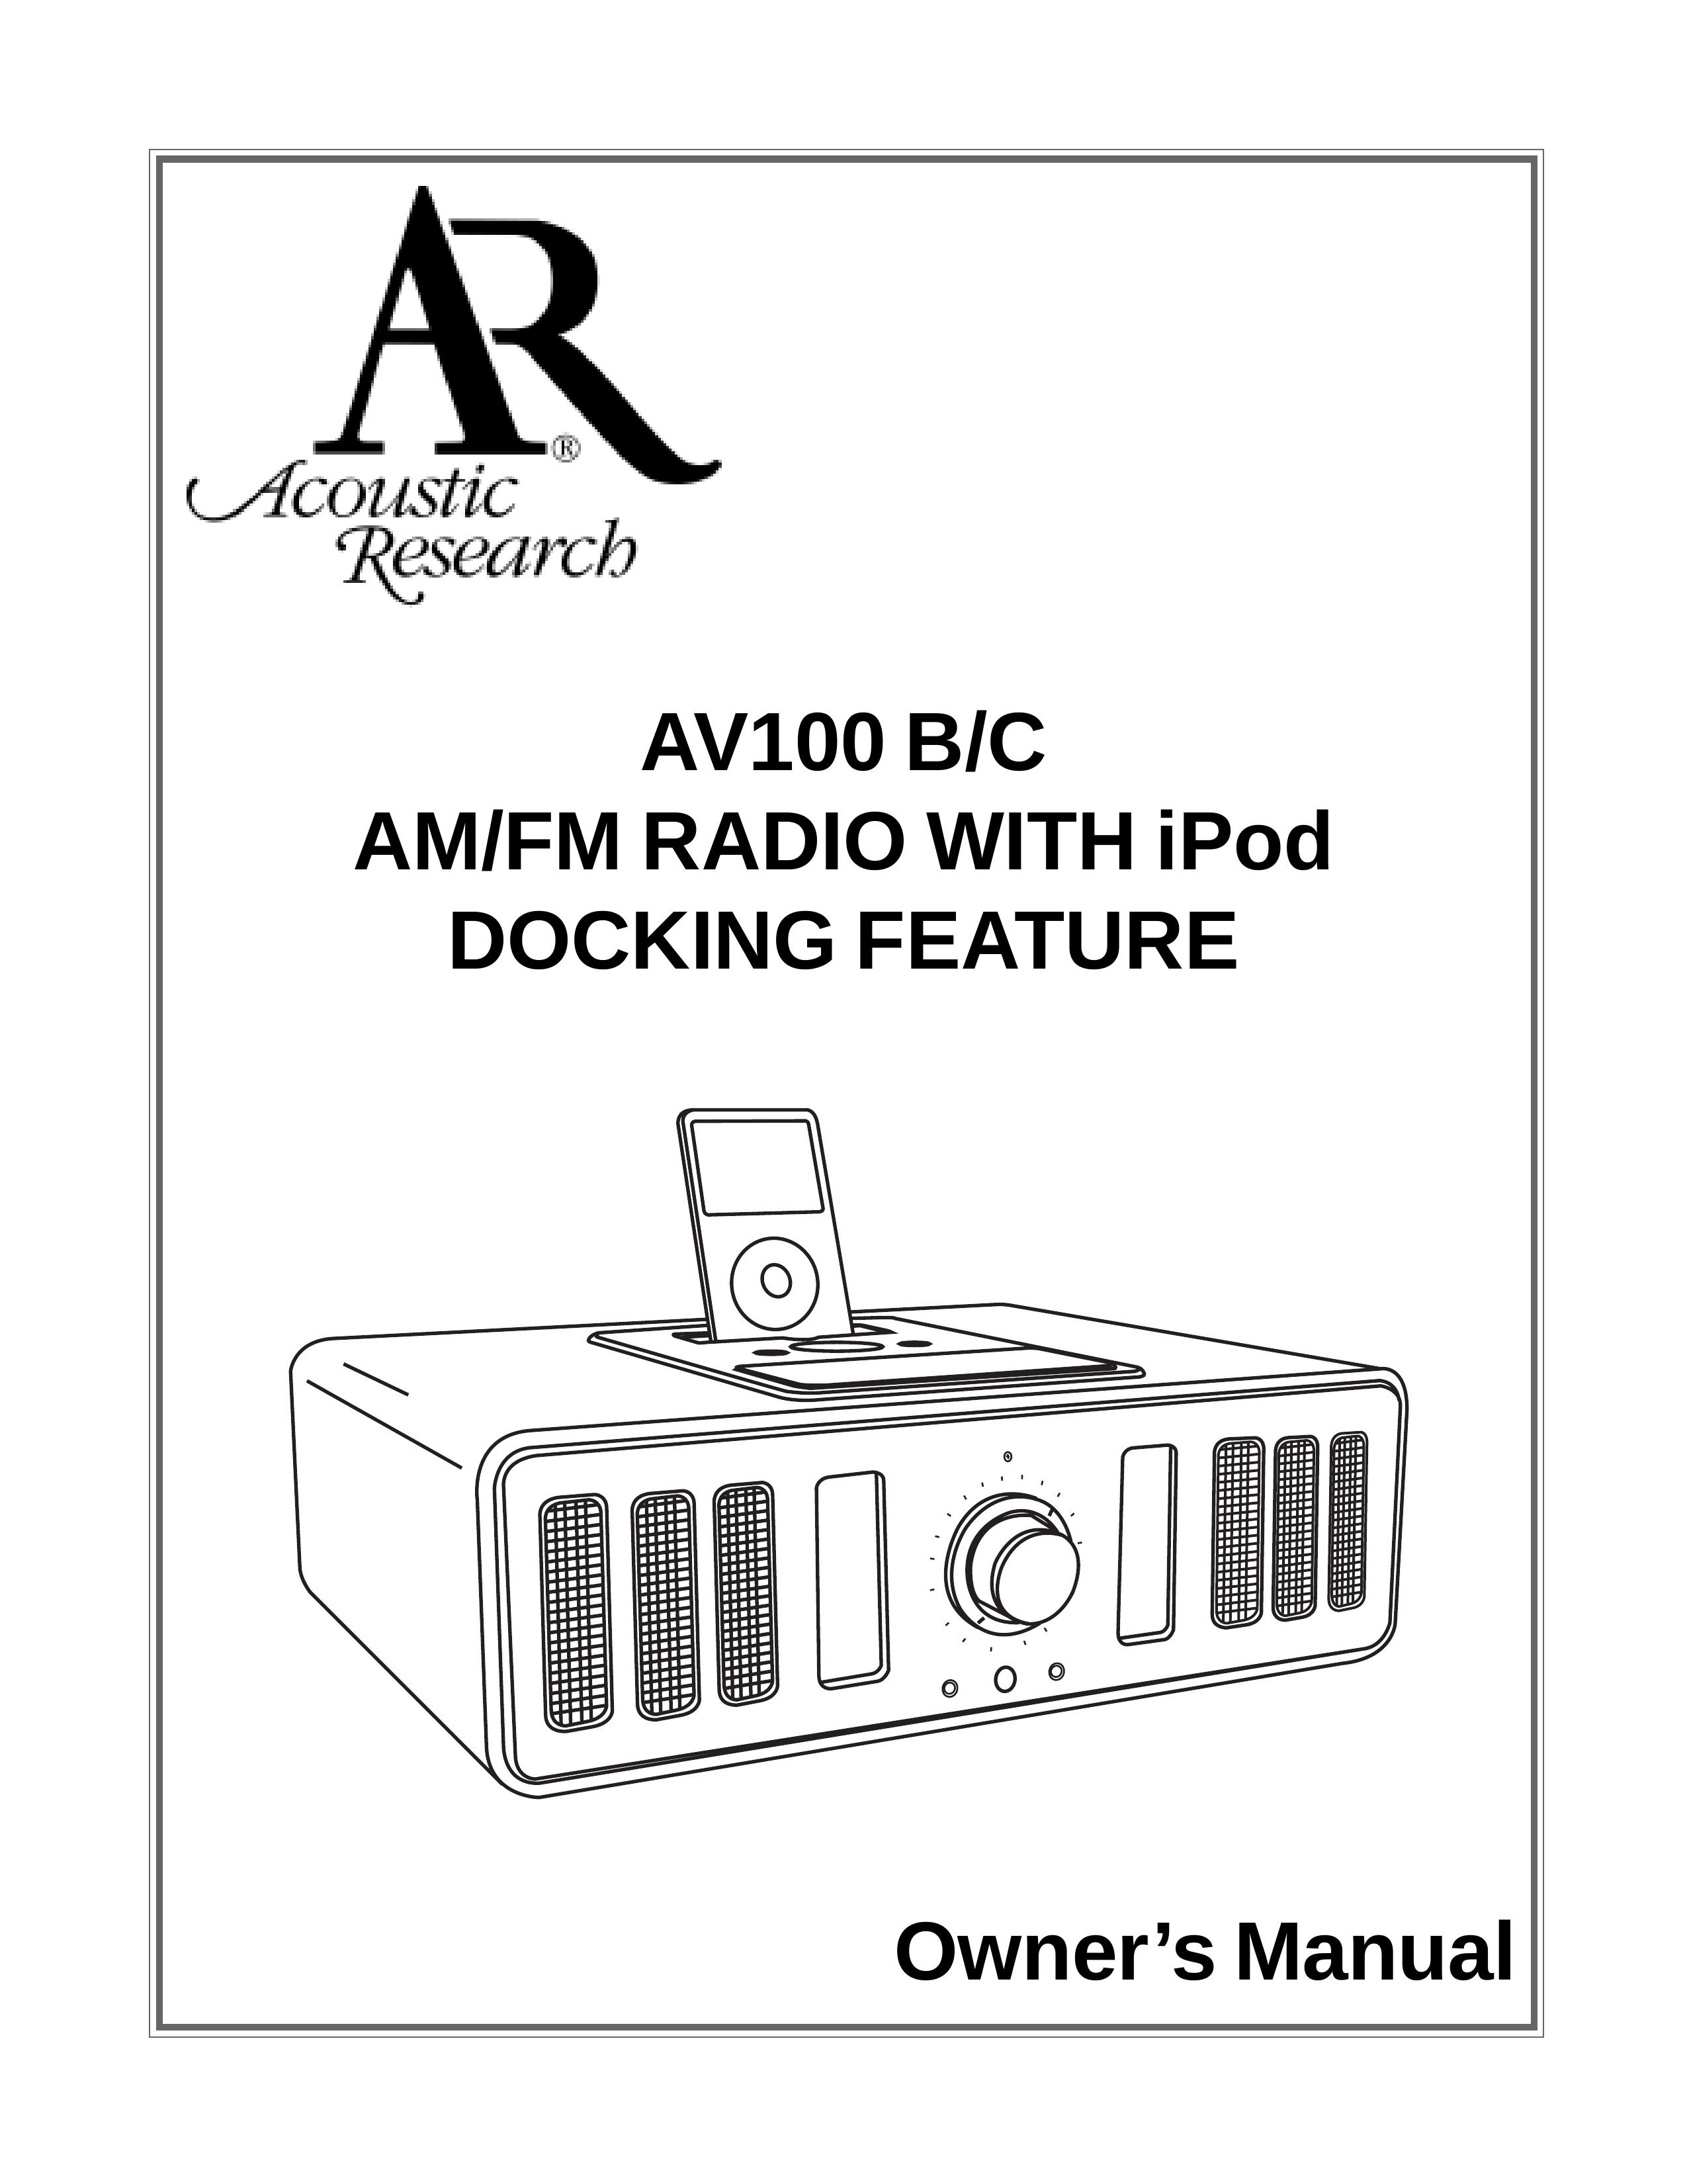 Acoustic Research AV100 C MP3 Docking Station User Manual